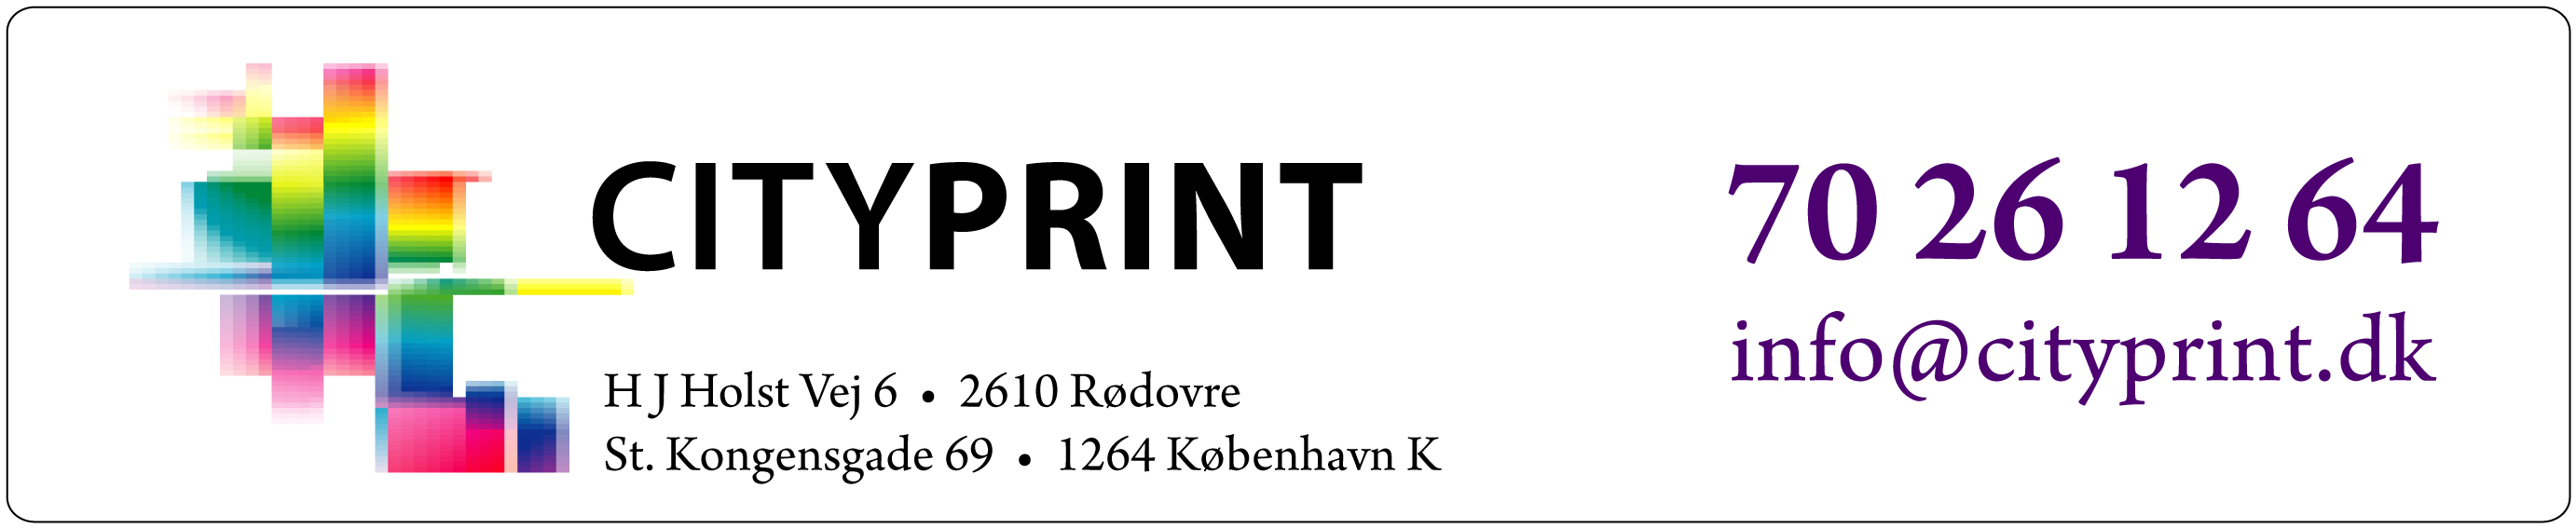 CityPrint - tlf: 70 26 12 64 - email:info@cityprint.dk